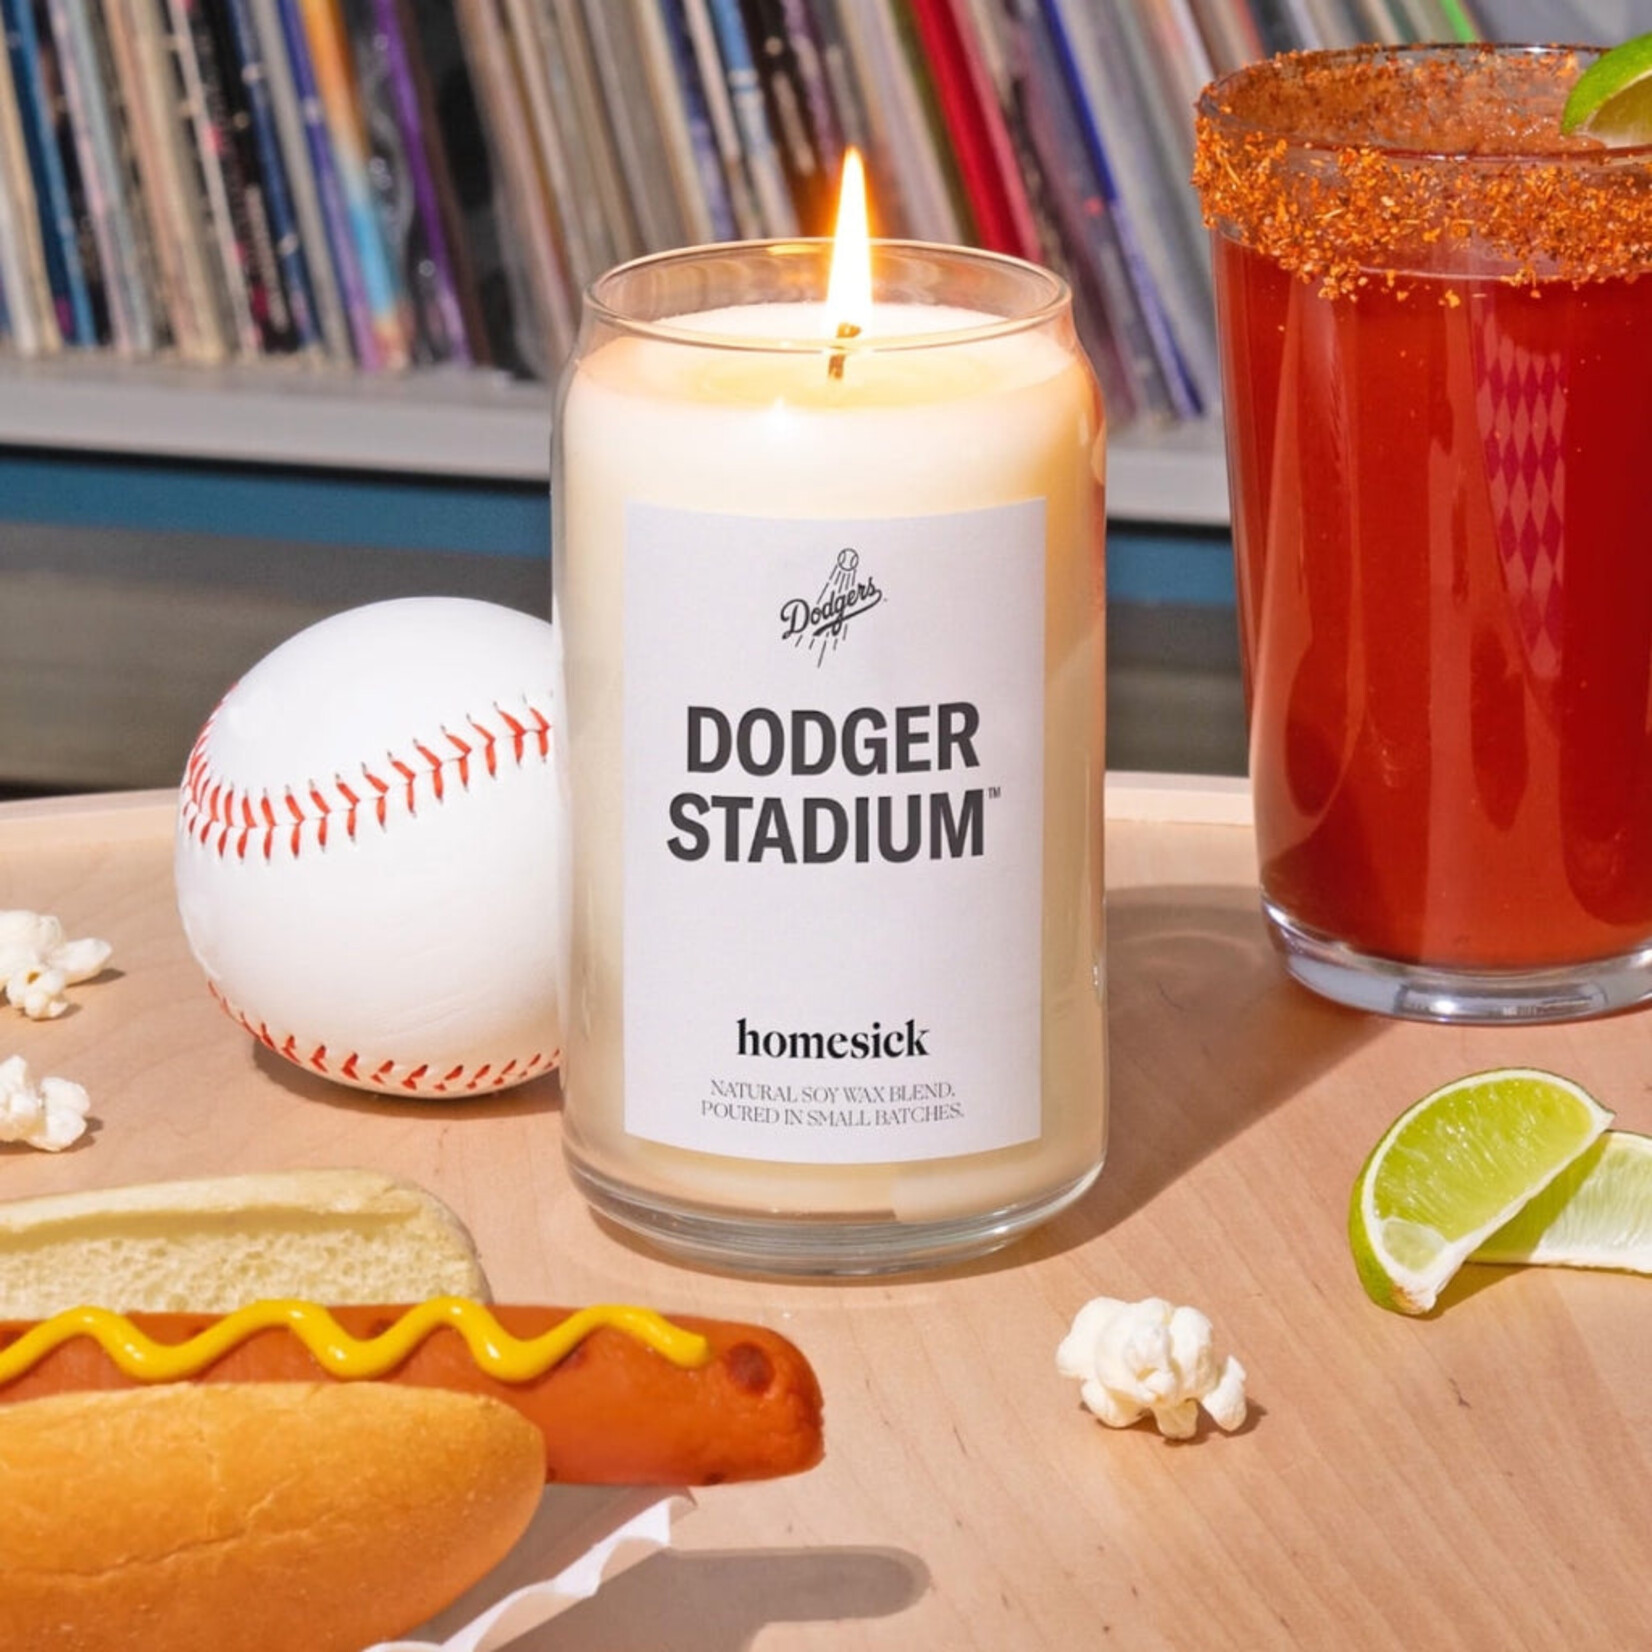 Homesick Homesick Dodger Stadium Candle